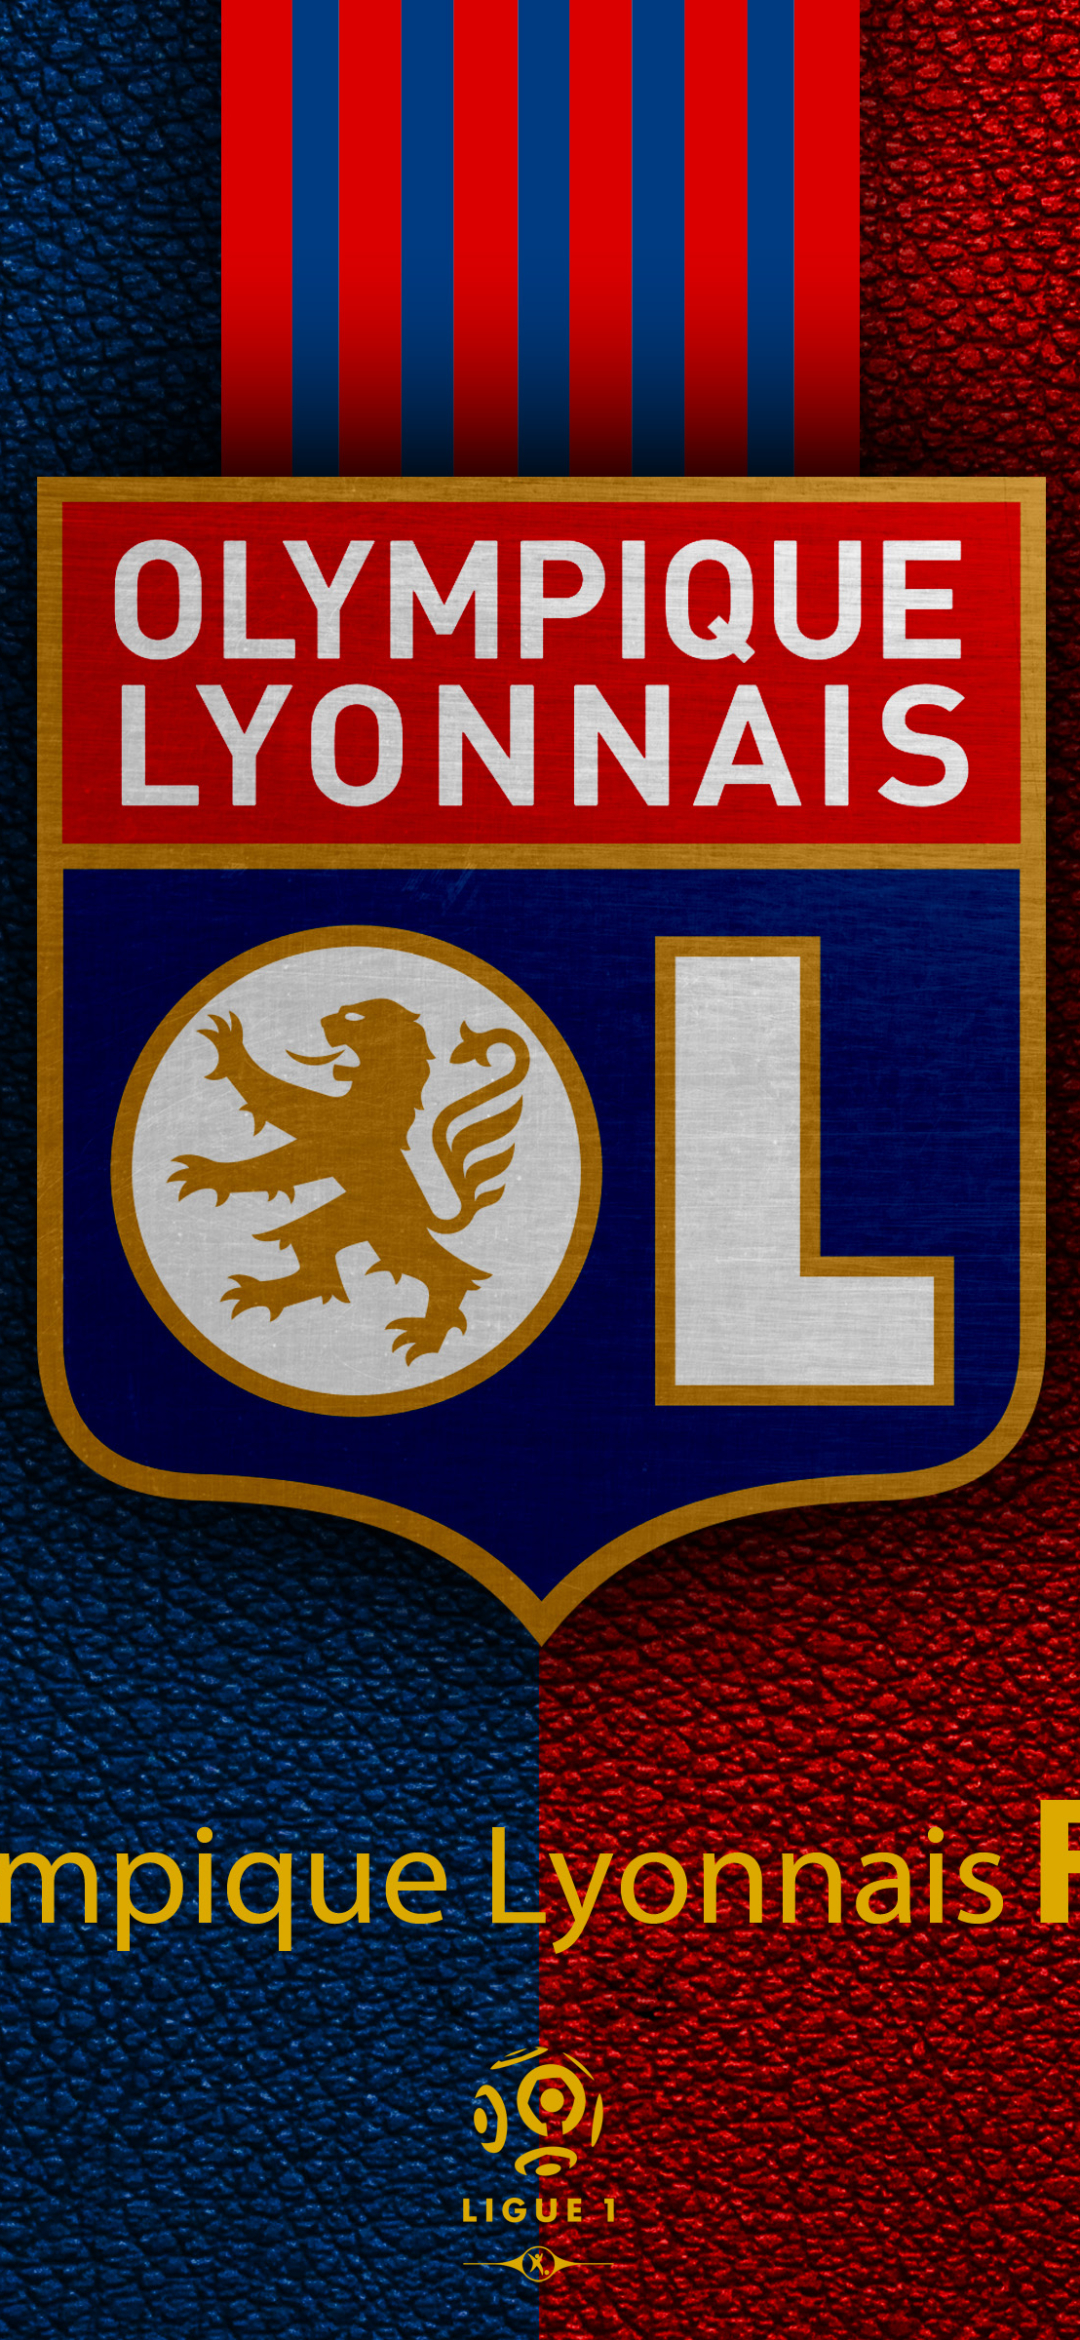 Baixar papel de parede para celular de Esportes, Futebol, Logotipo, Emblema, Olympique Lyonnais gratuito.